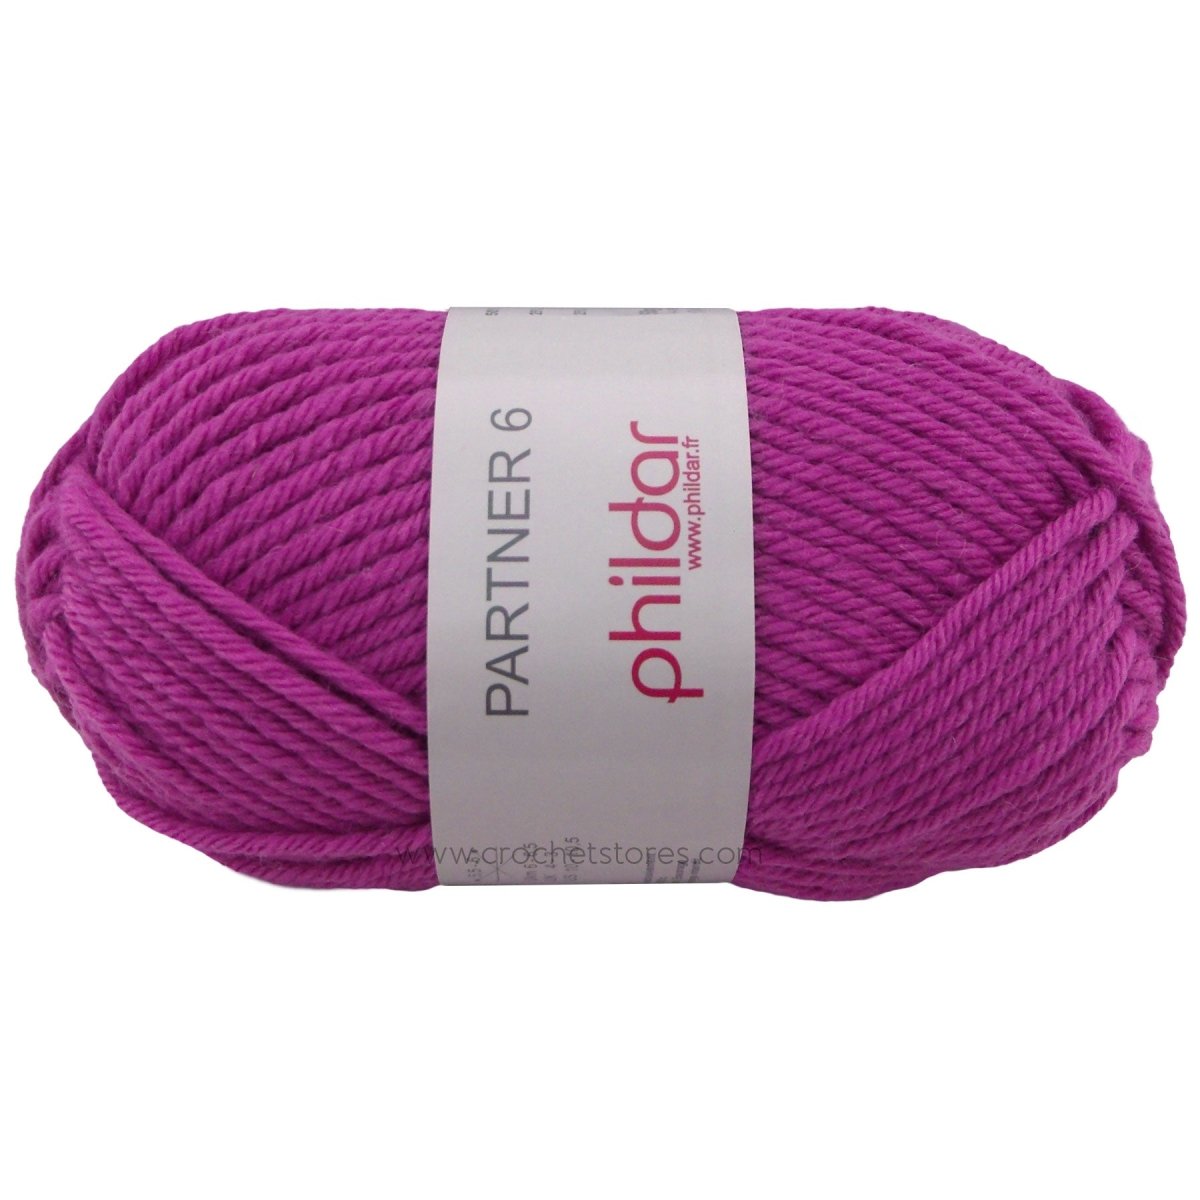 PARTNER 6 - Crochetstores500878-021